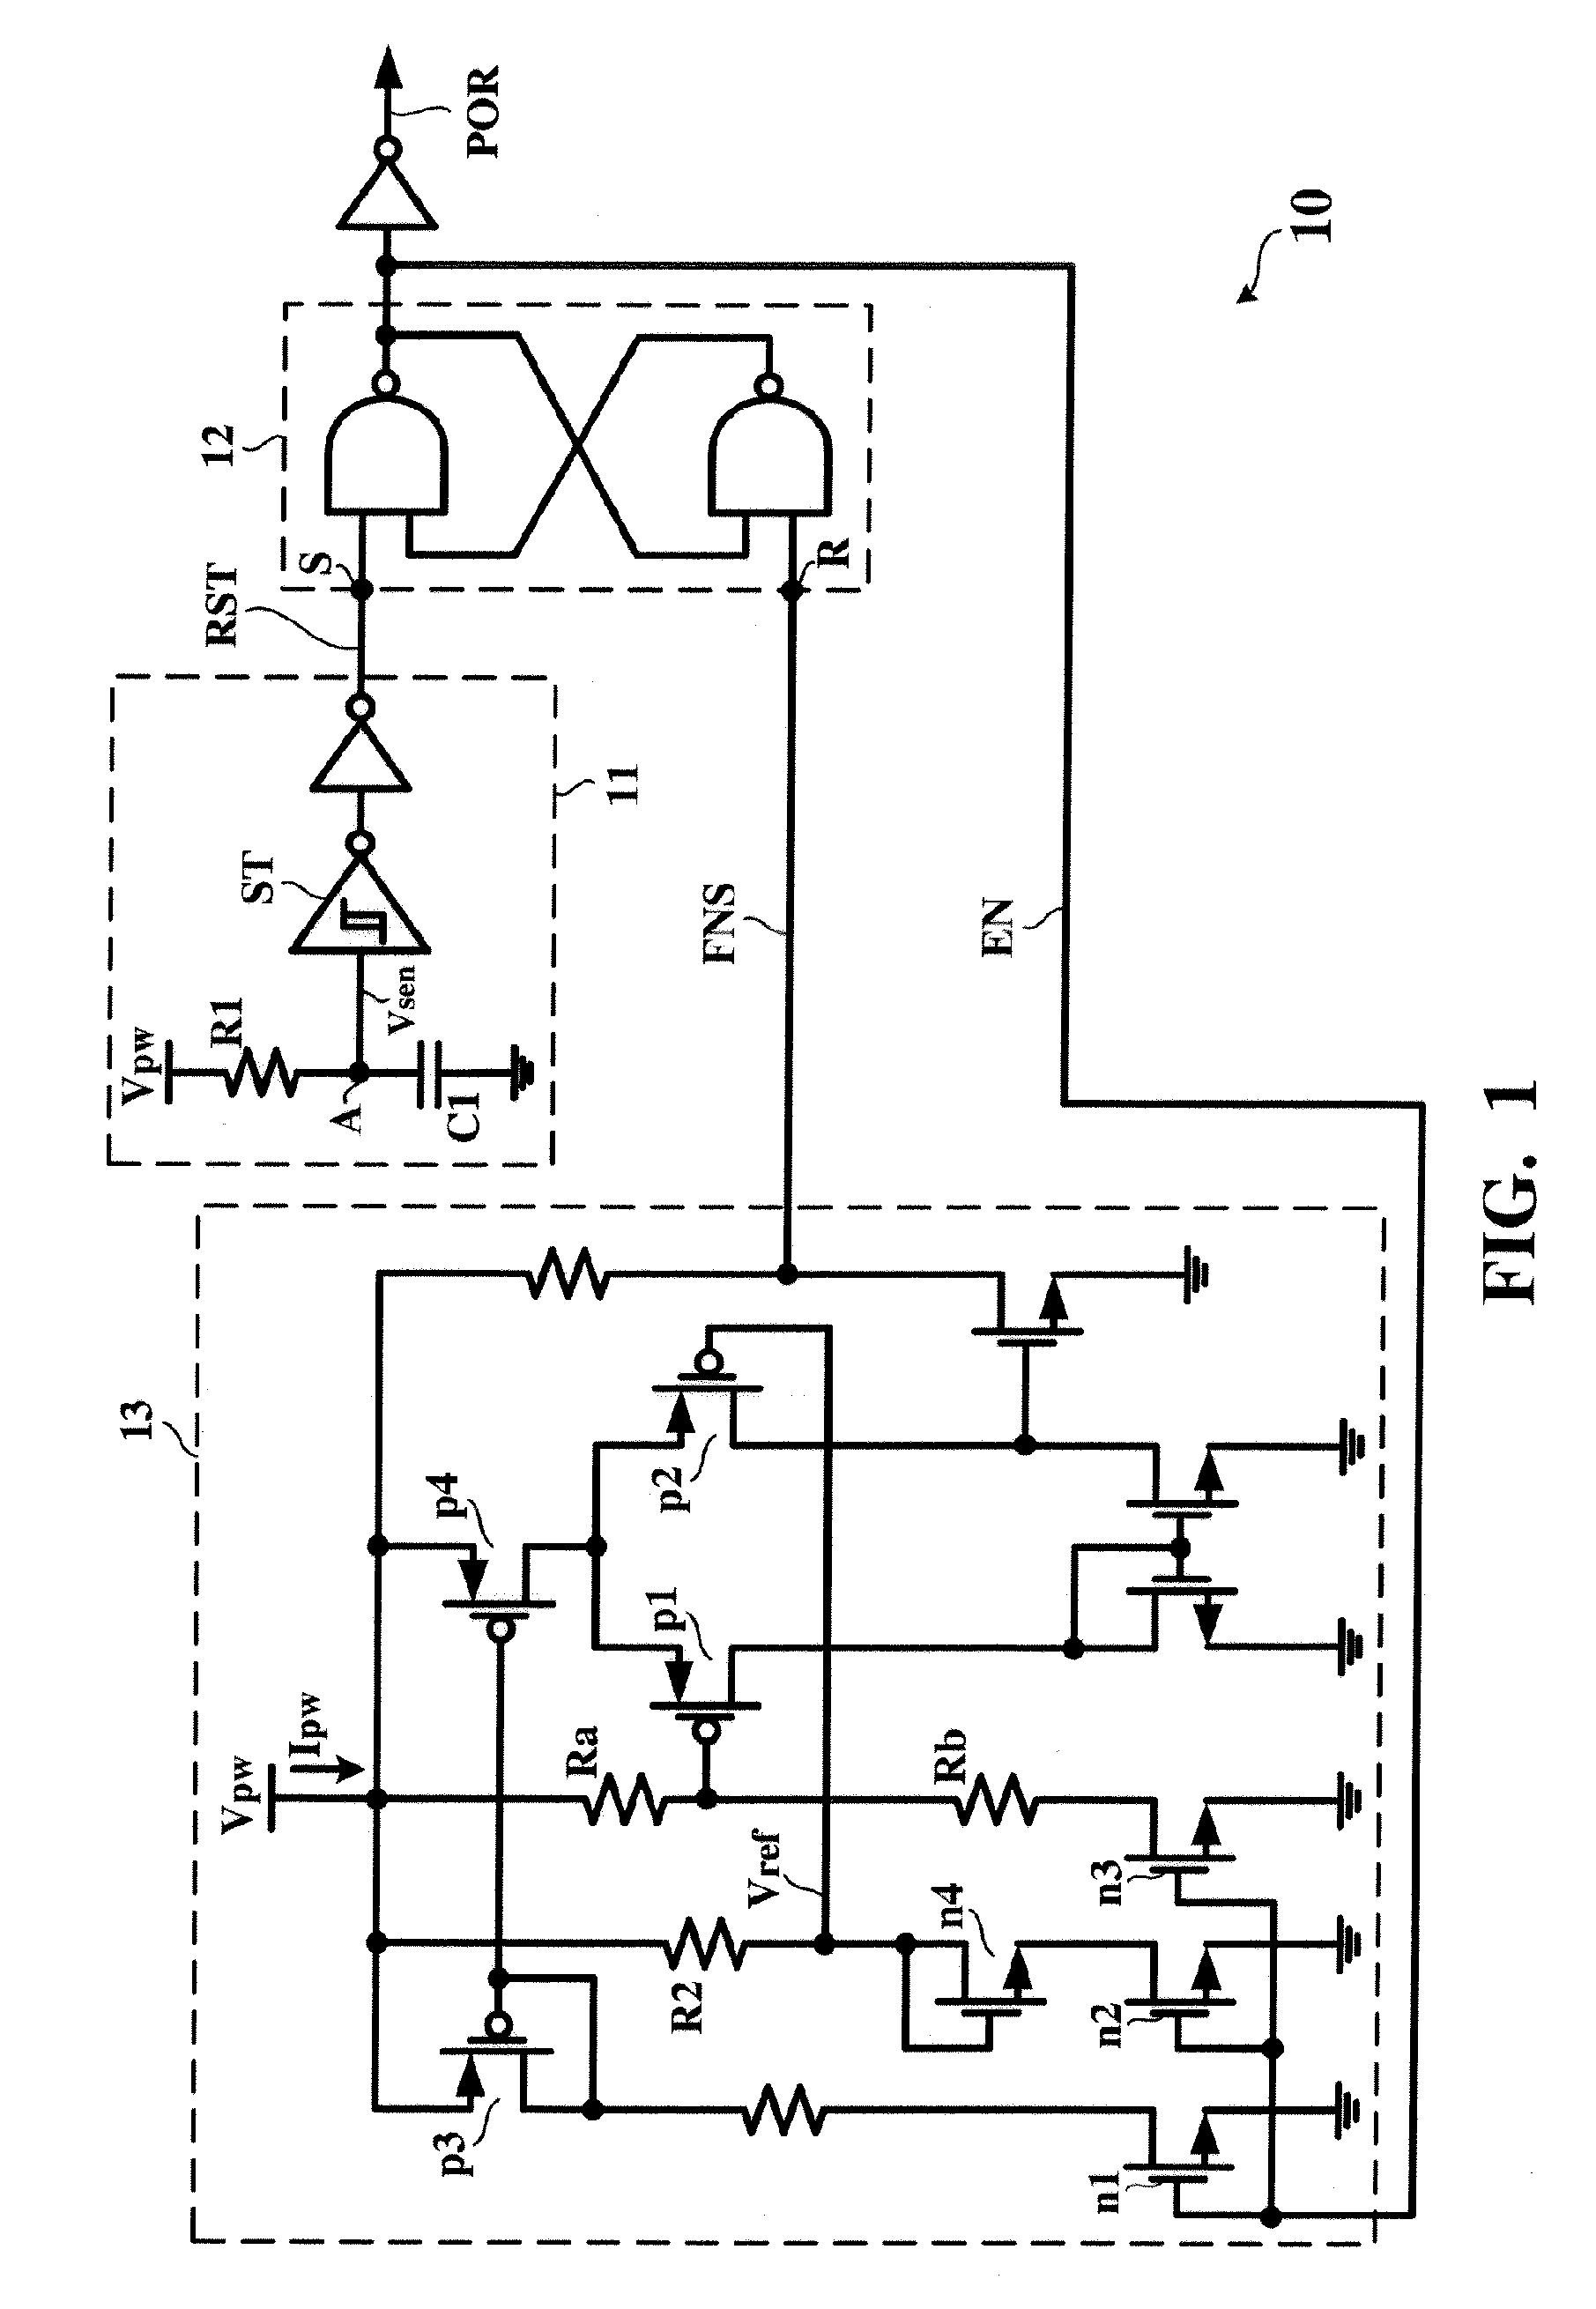 Power-on reset circuit